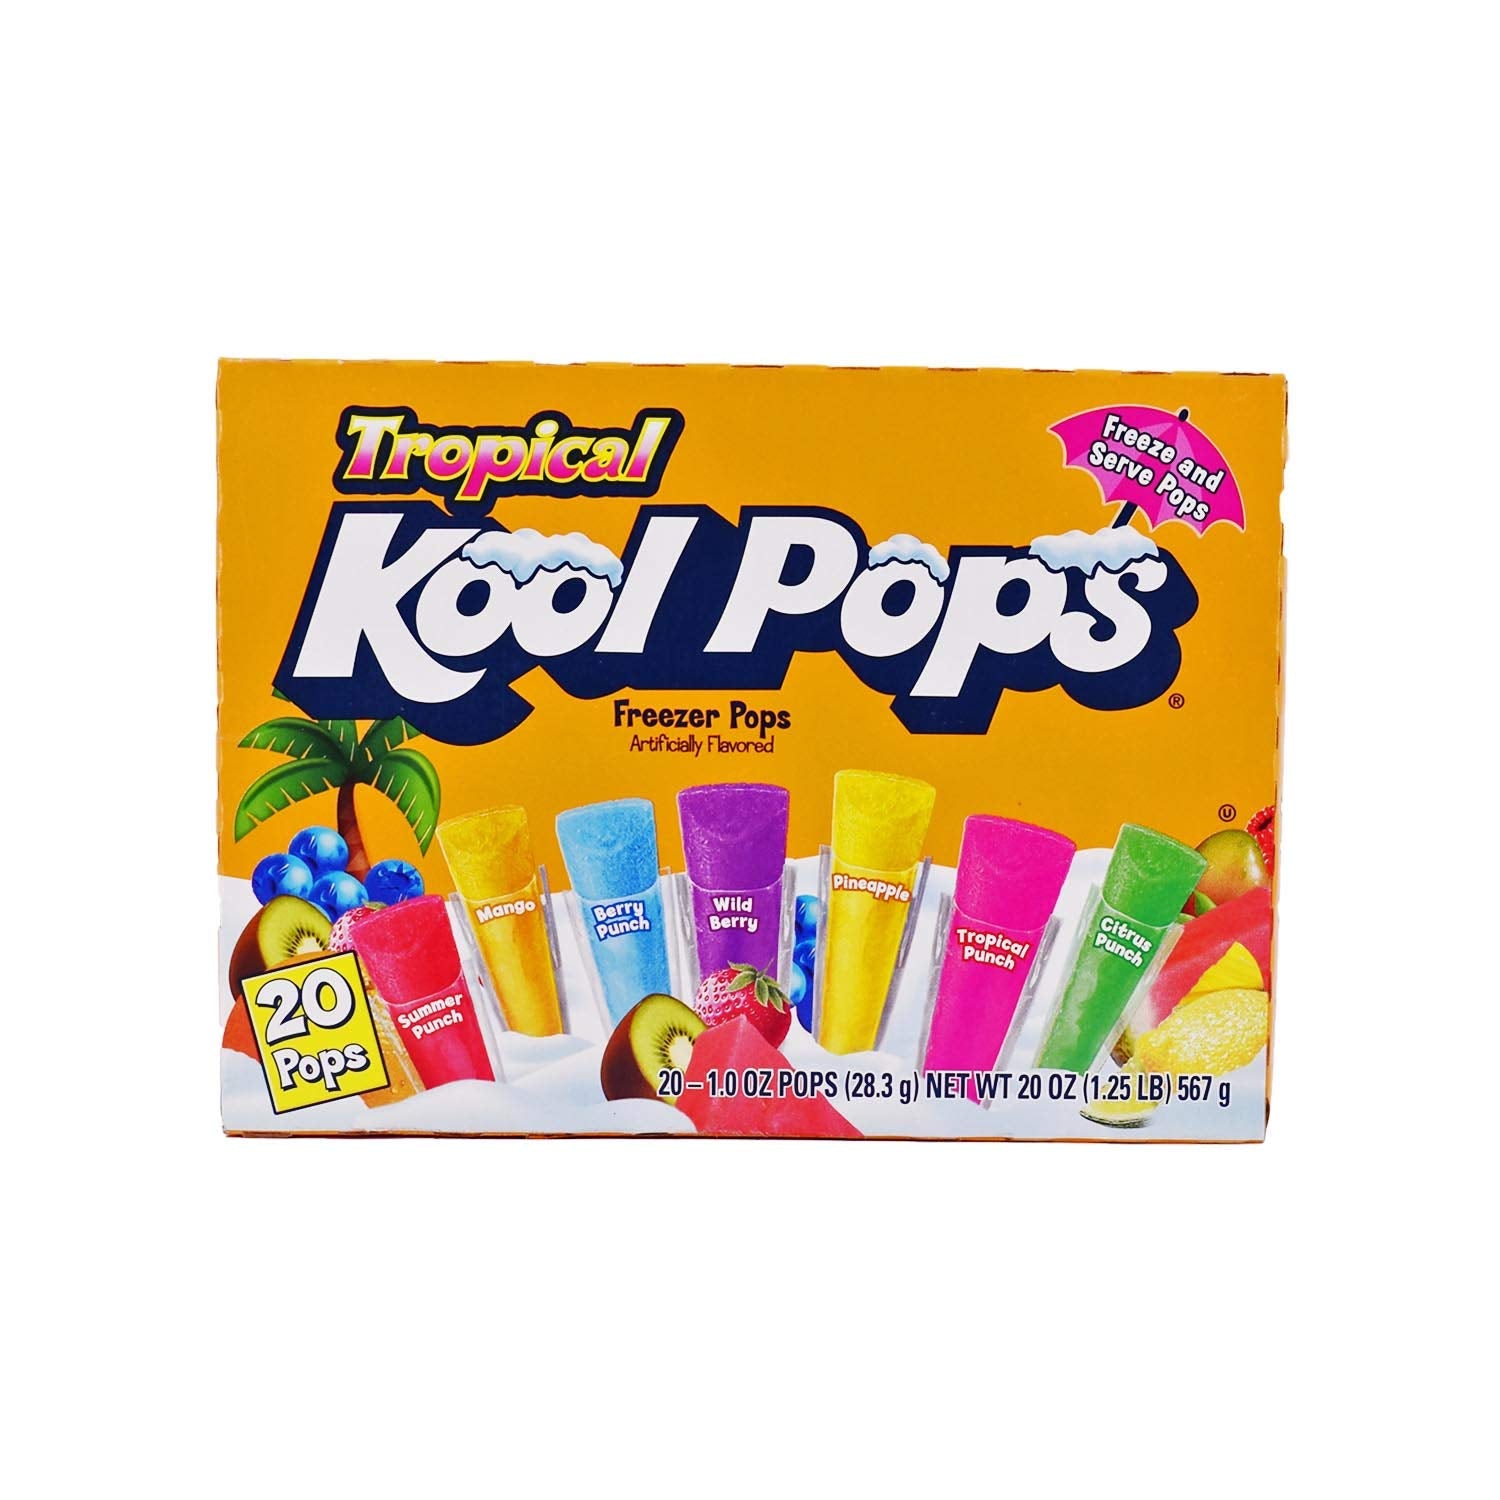 Kool Pops Tropical Freezer Pops 20 Pops - Pack of 2 (Imported)